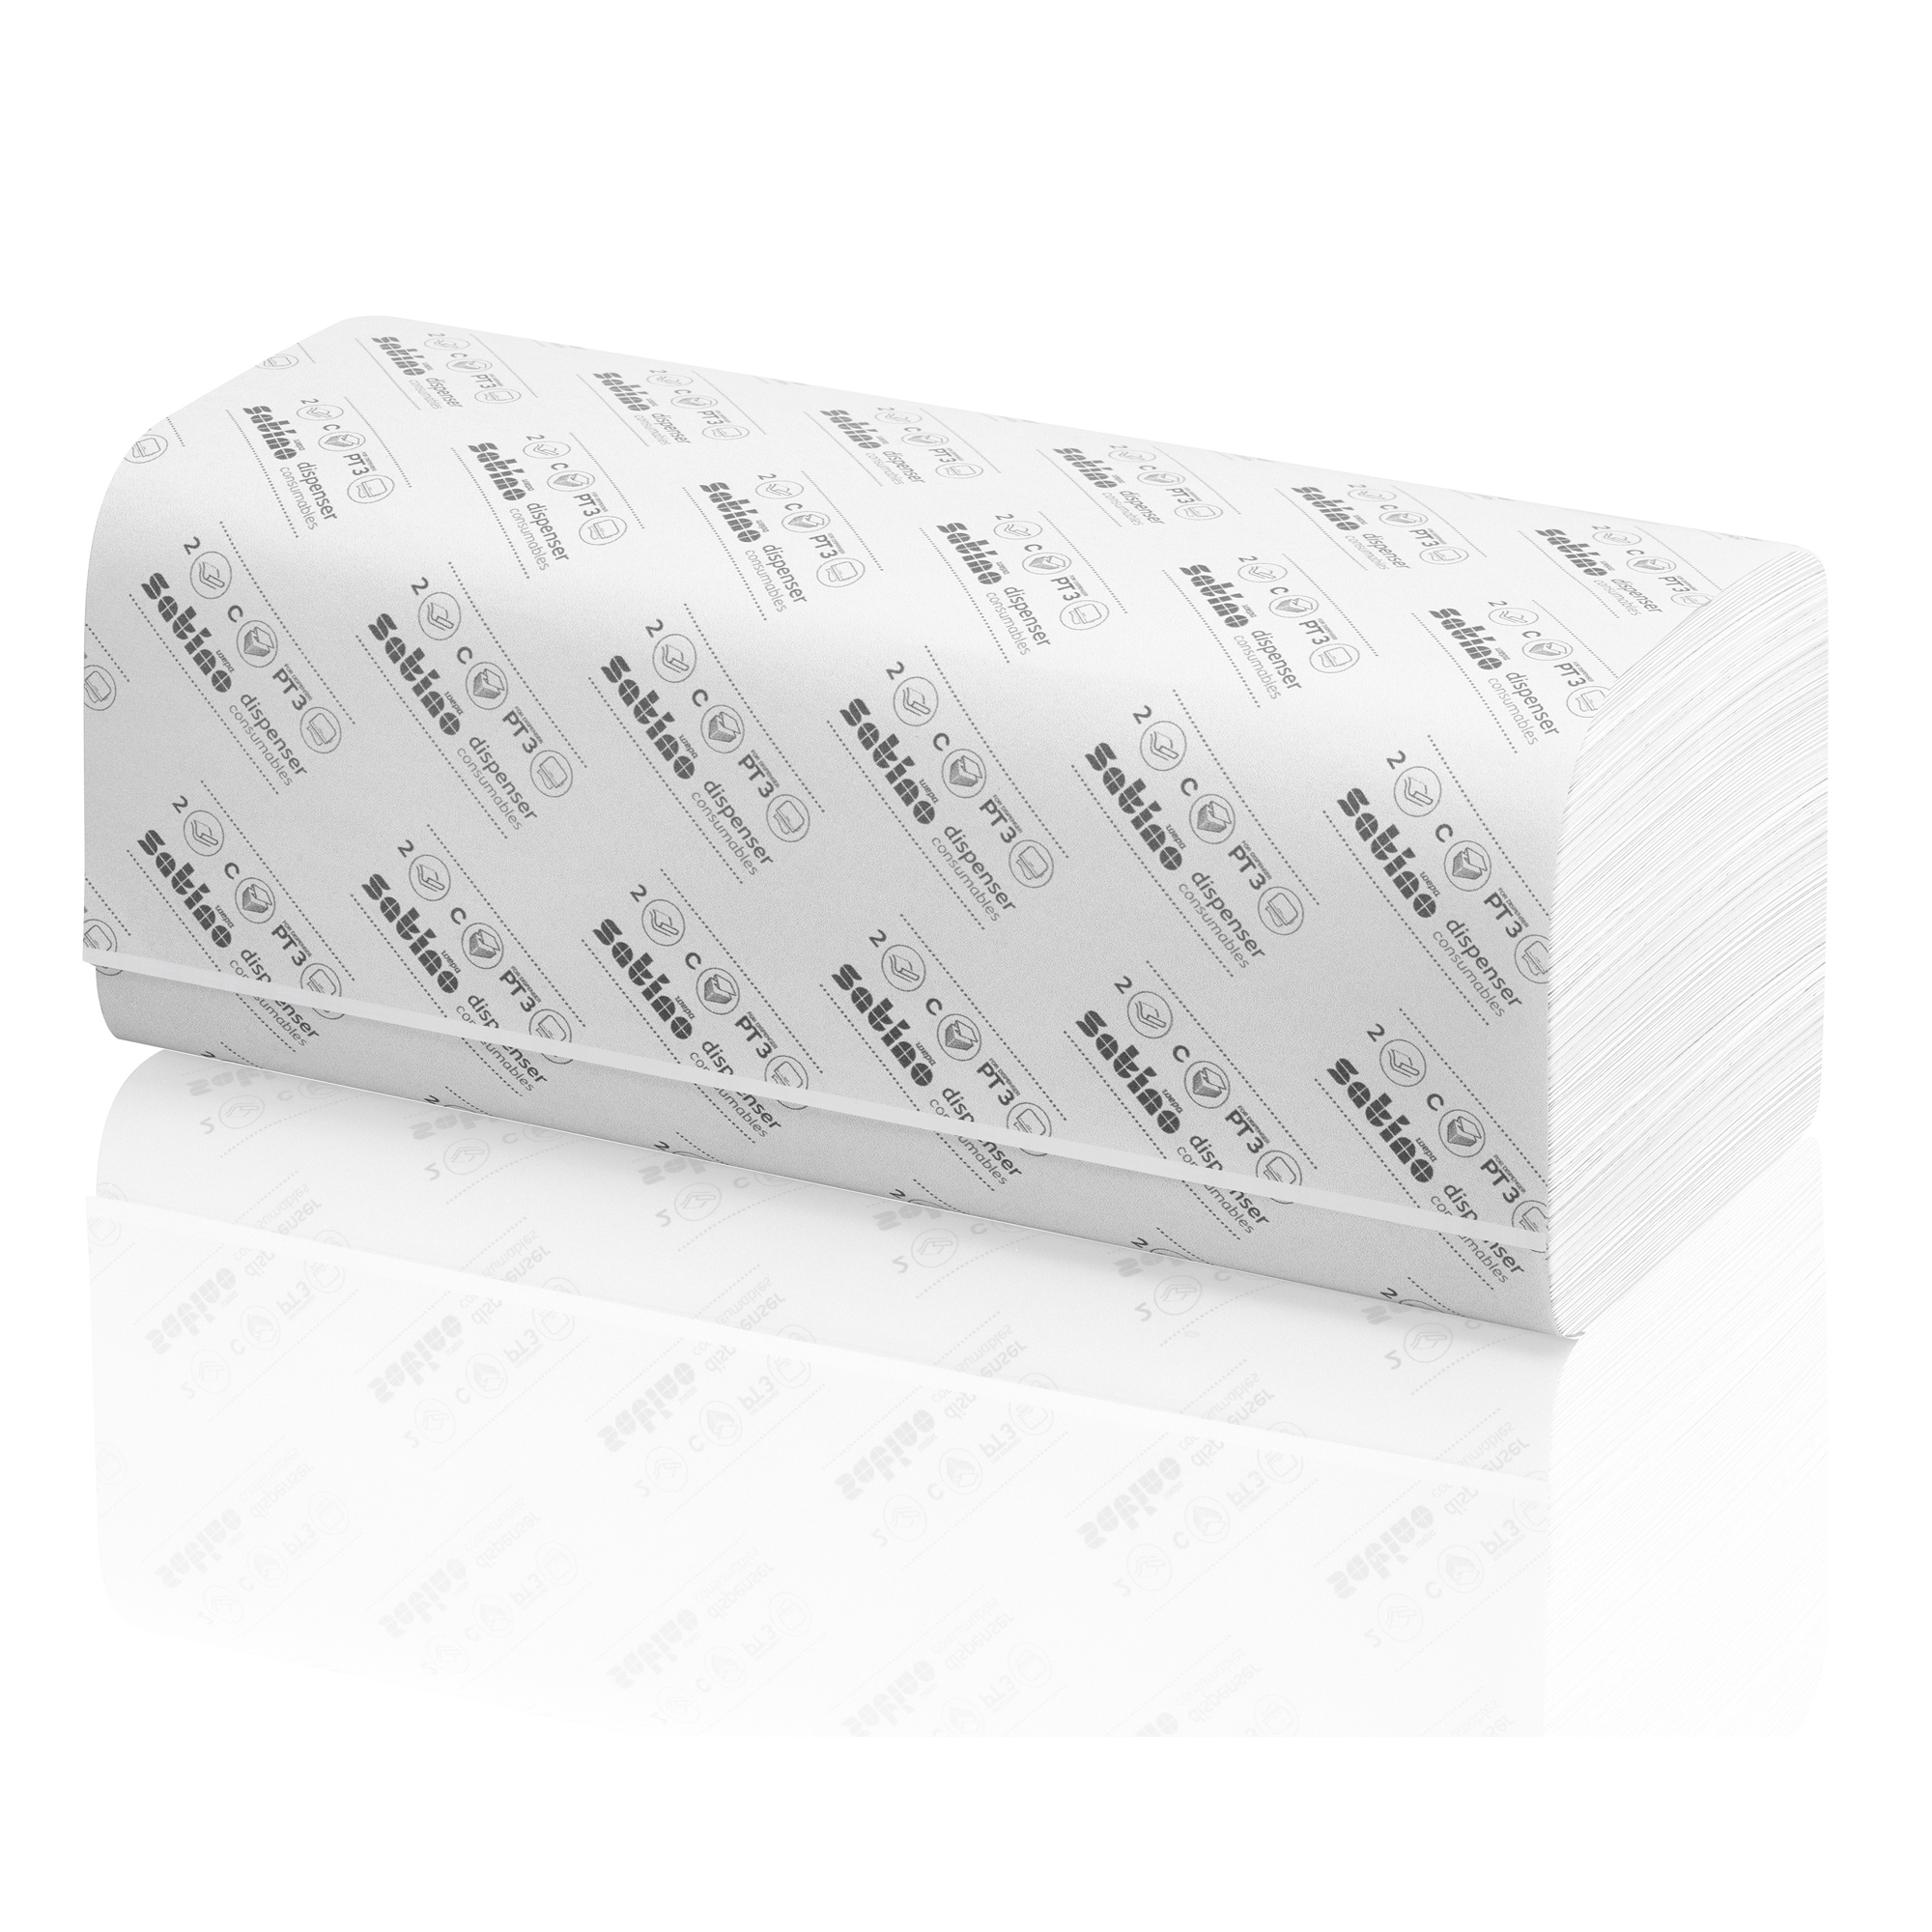 Satino by Wepa comfort Papierhandtücher Recycling Tissue, CZ, 25x32, 2-lagig, hochweiß 3072 Tücher Banderole 277410